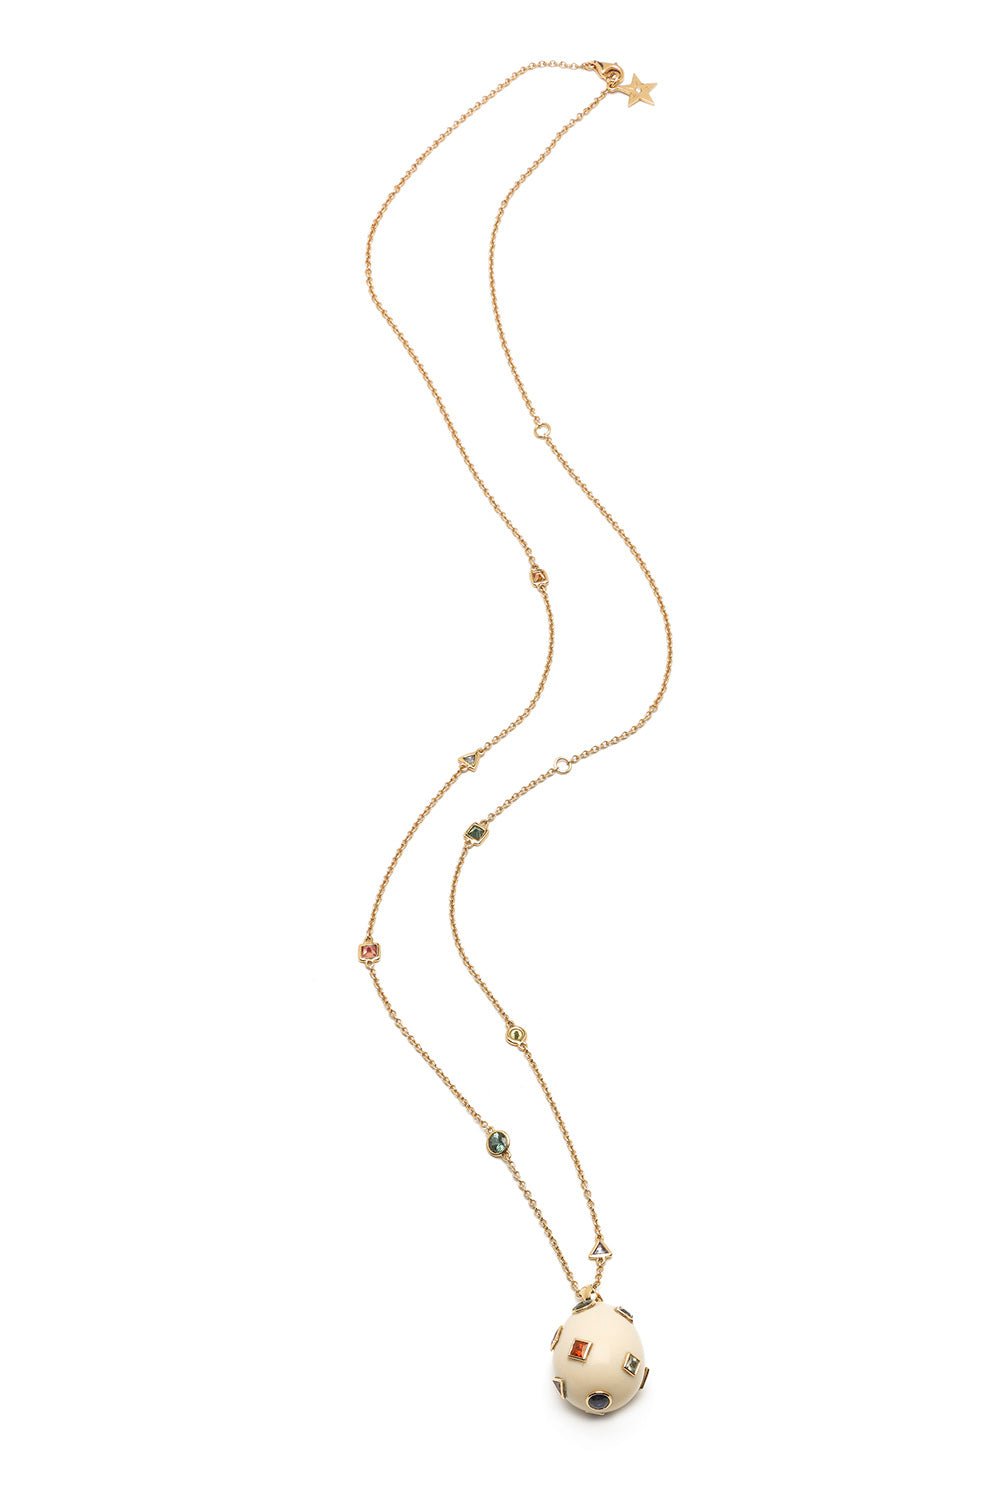 BIBI VAN DER VELDEN-Multi Sapphire Pop Art Necklace-YELLOW GOLD